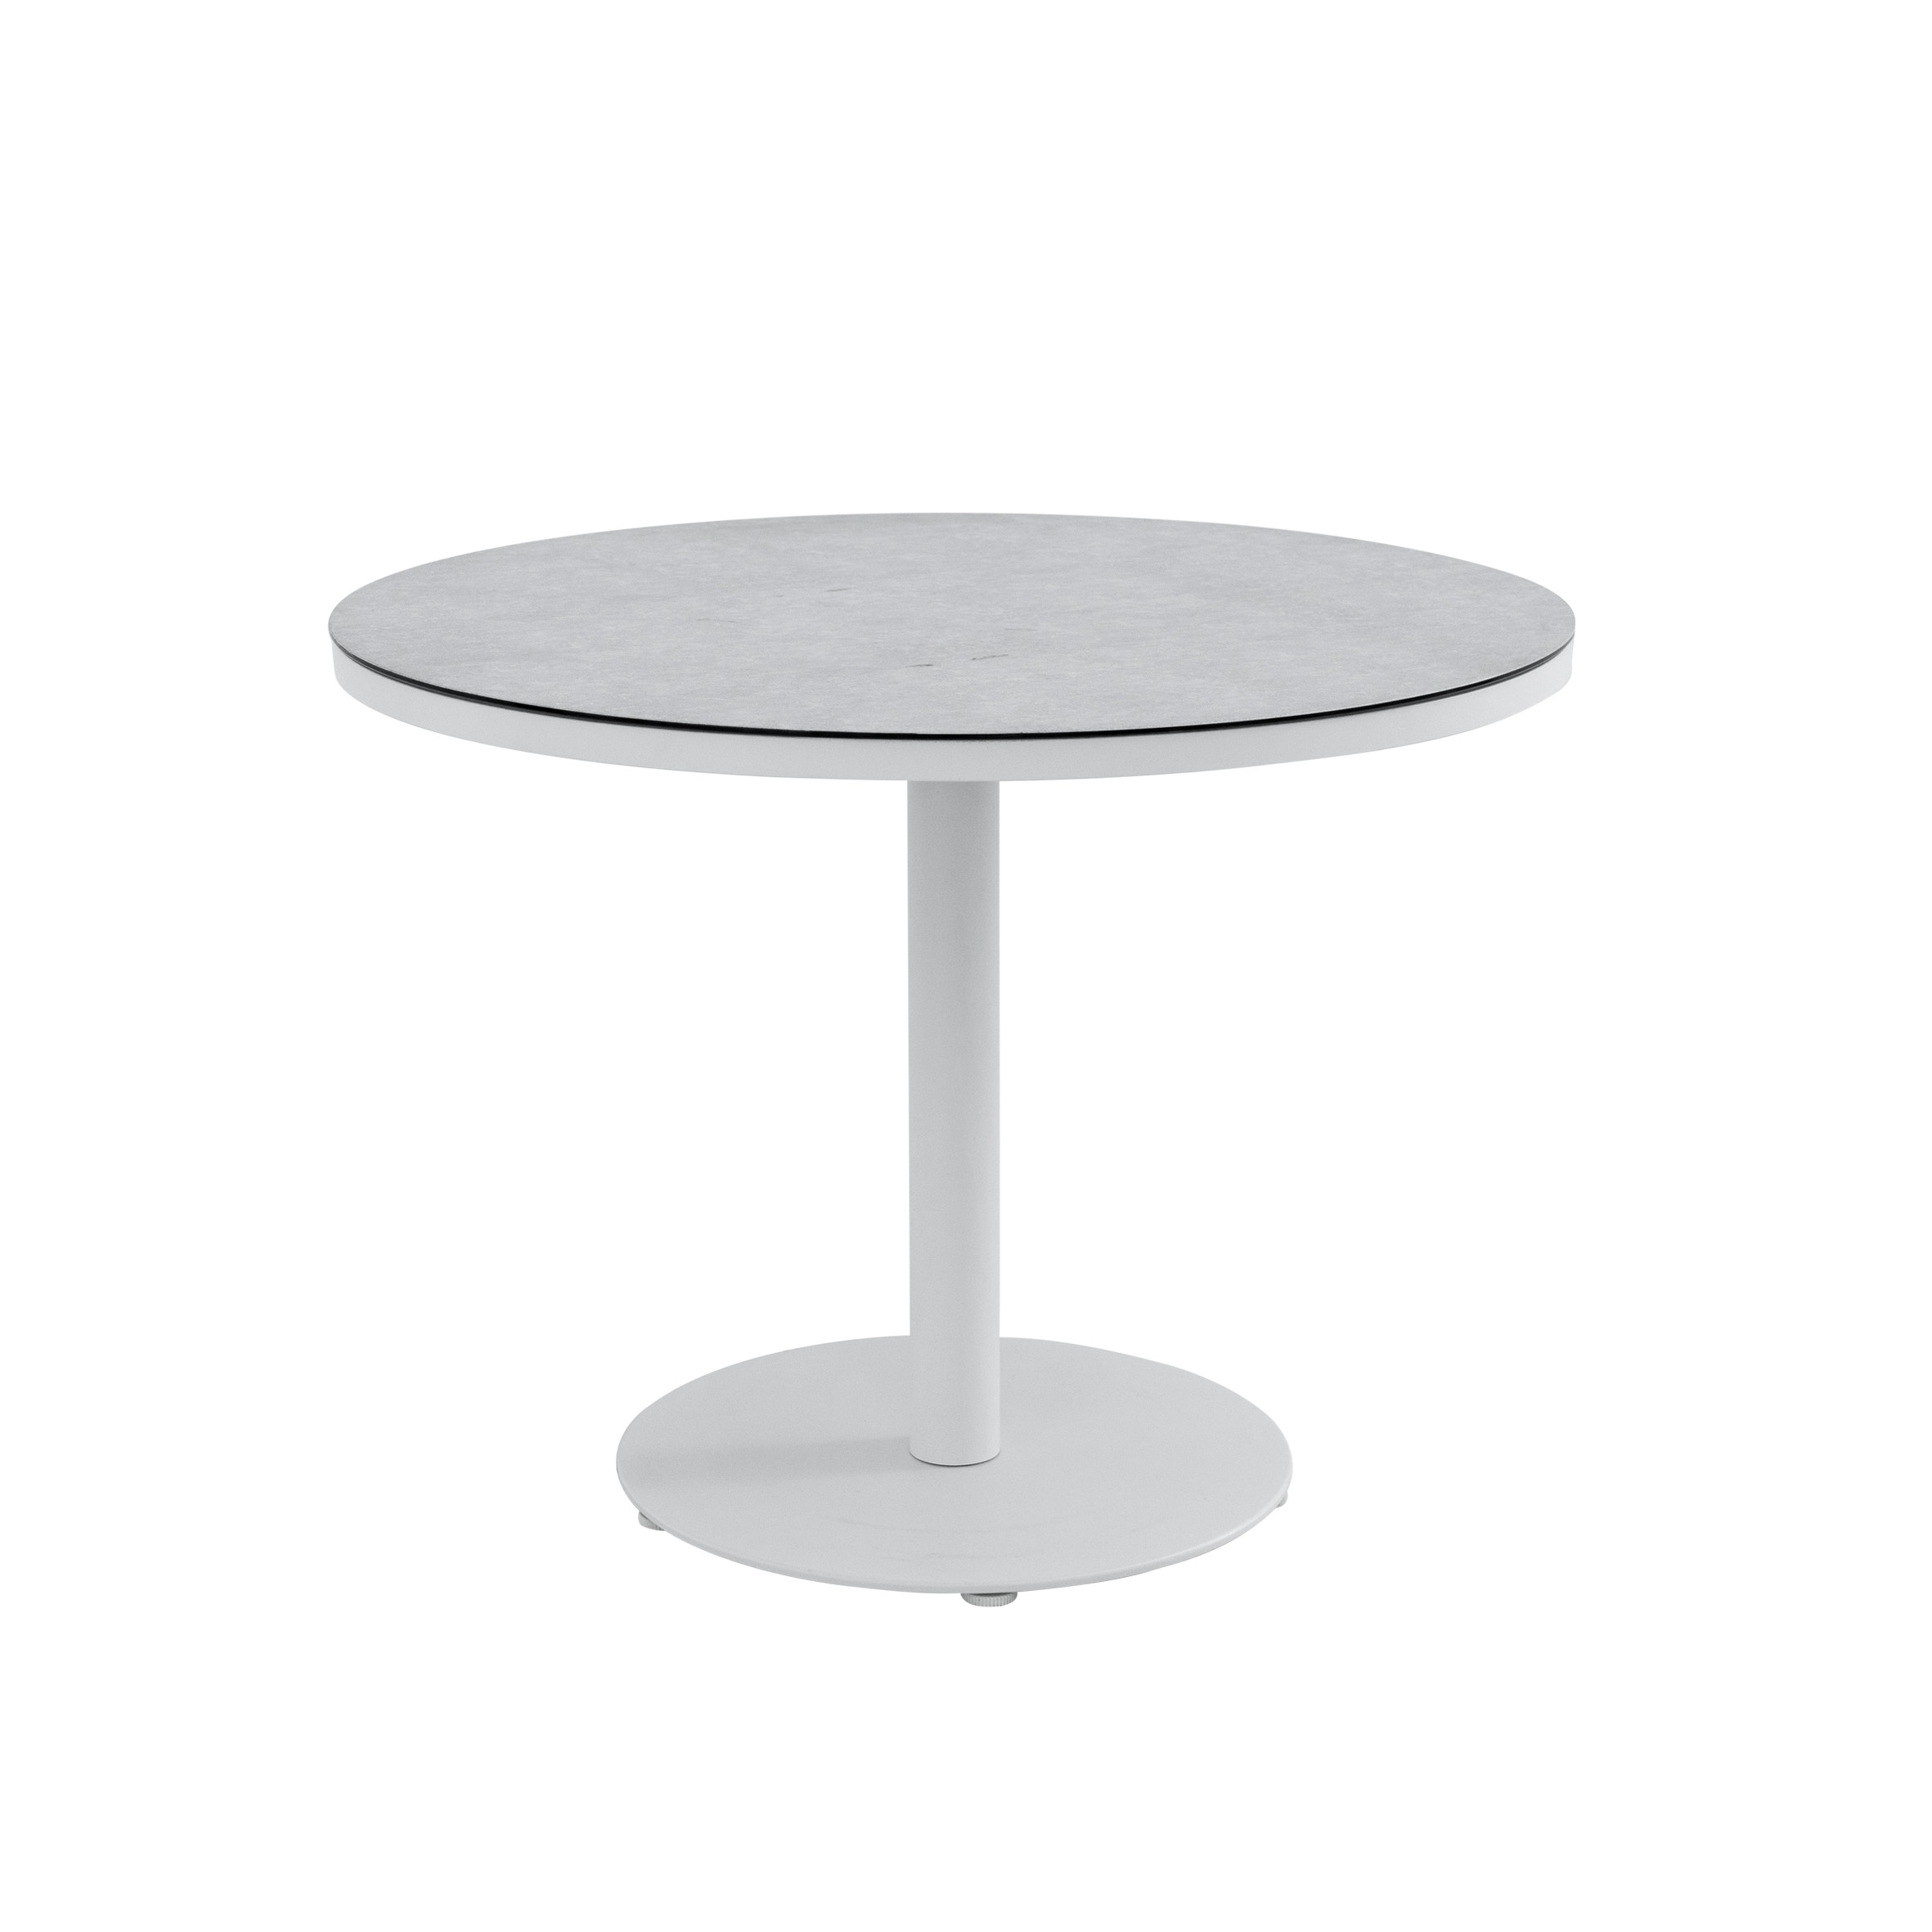 Dante alu.round table(Ceramic glass) Itinatampok na Larawan